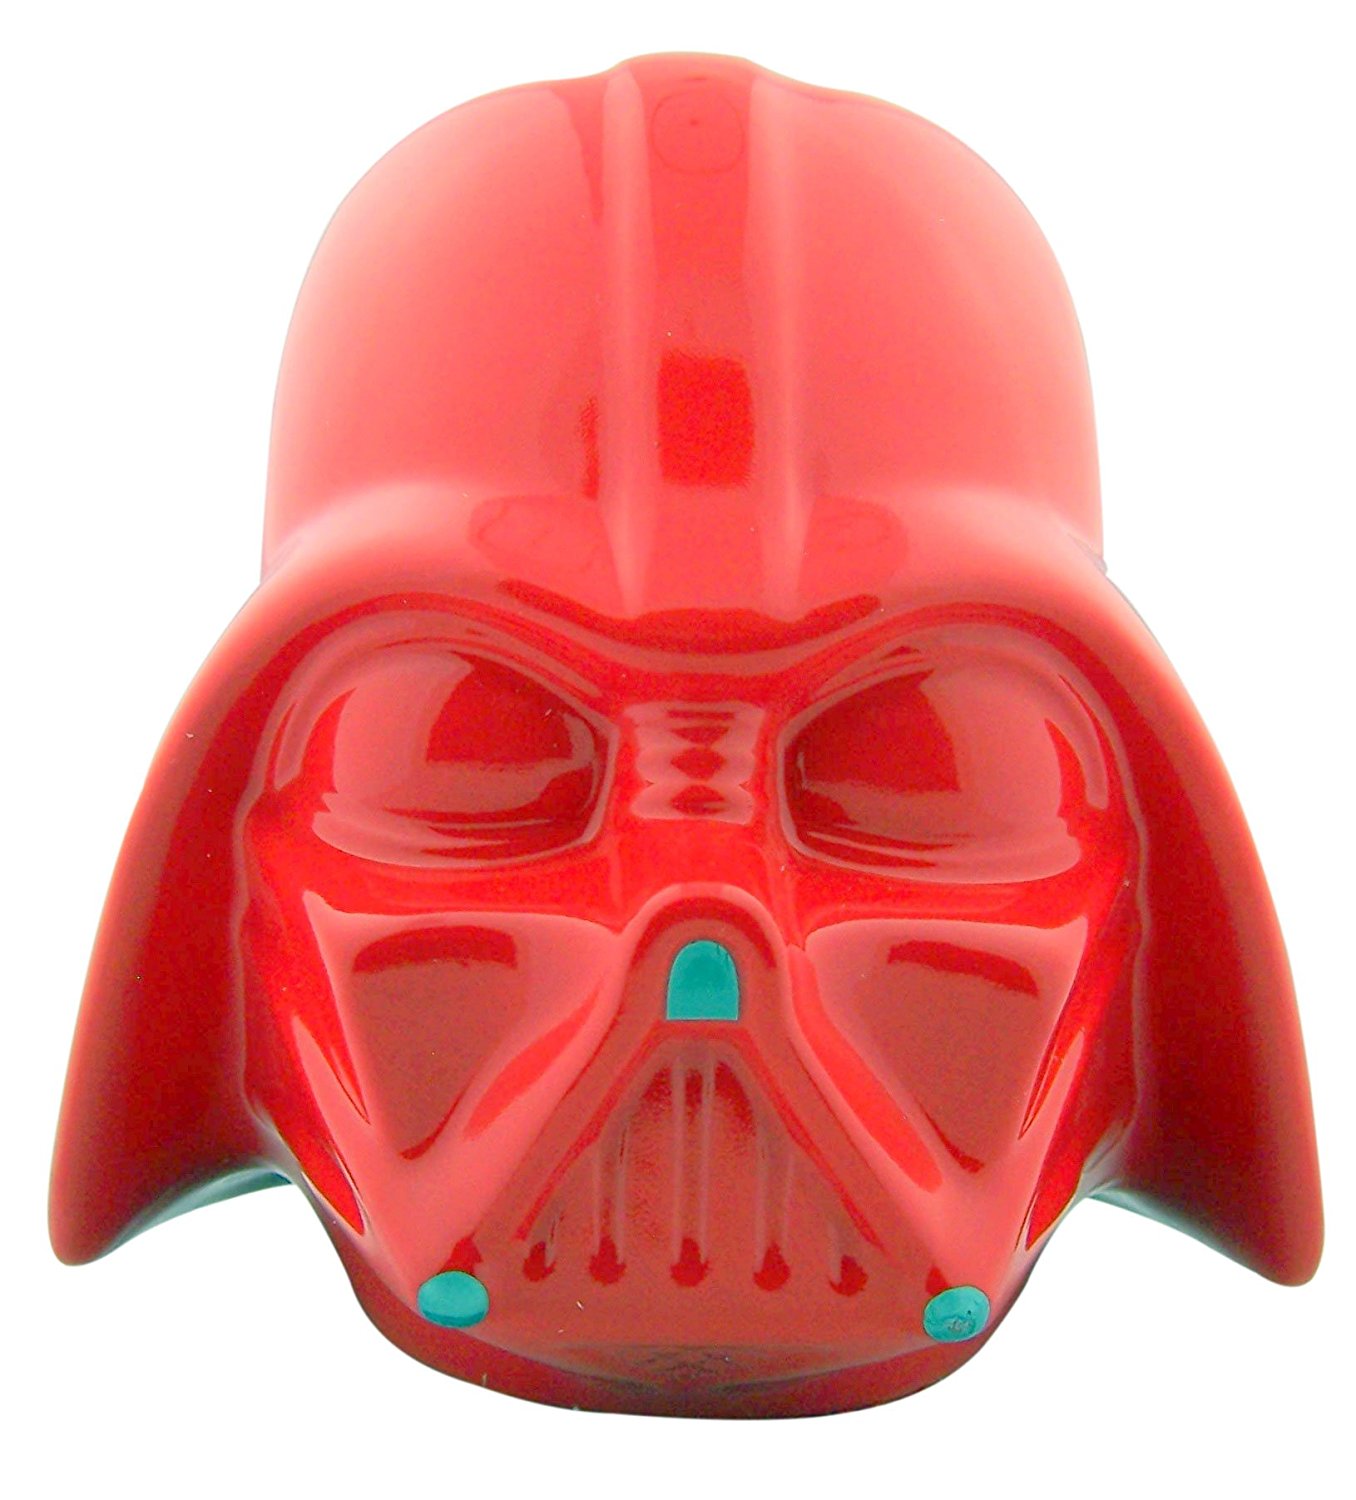 Darth Vader Candy Cookie Jar